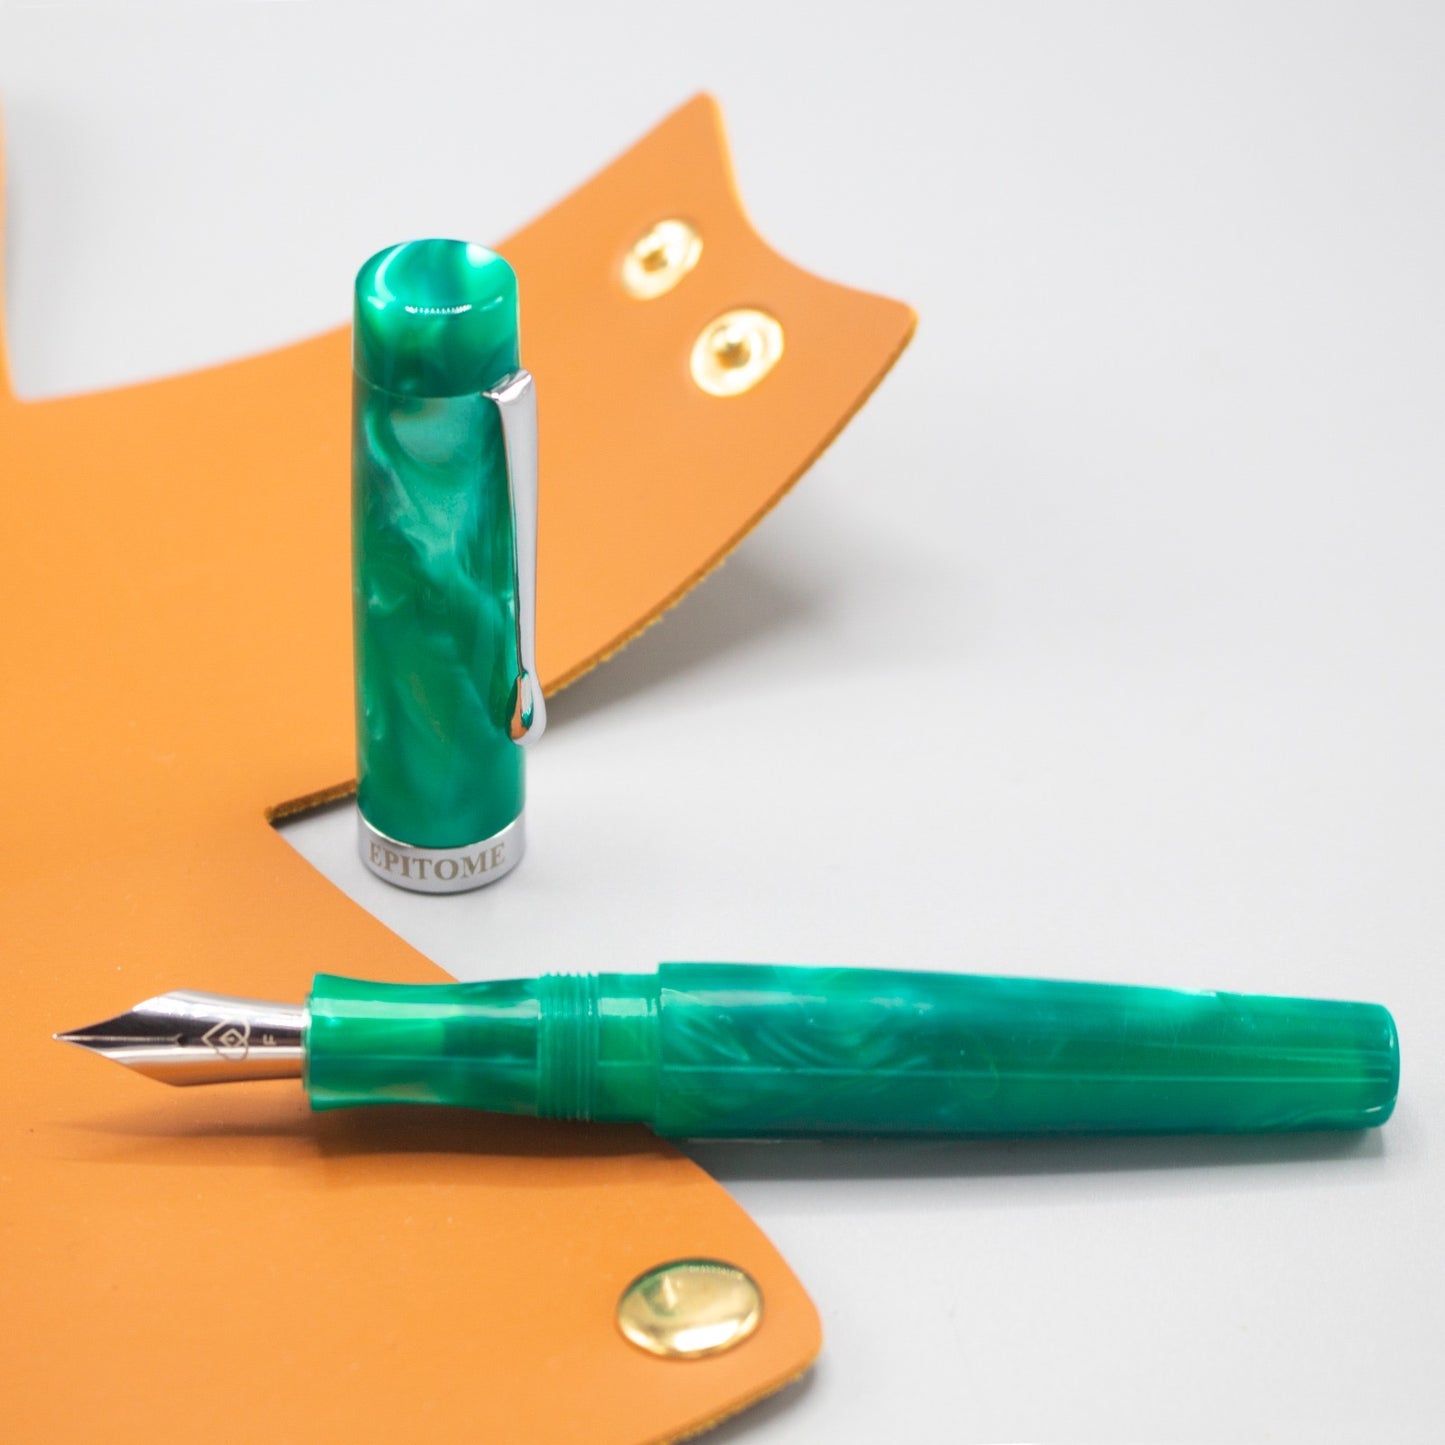 Epitome Emerald Fountain Pen - Flaghship Edition